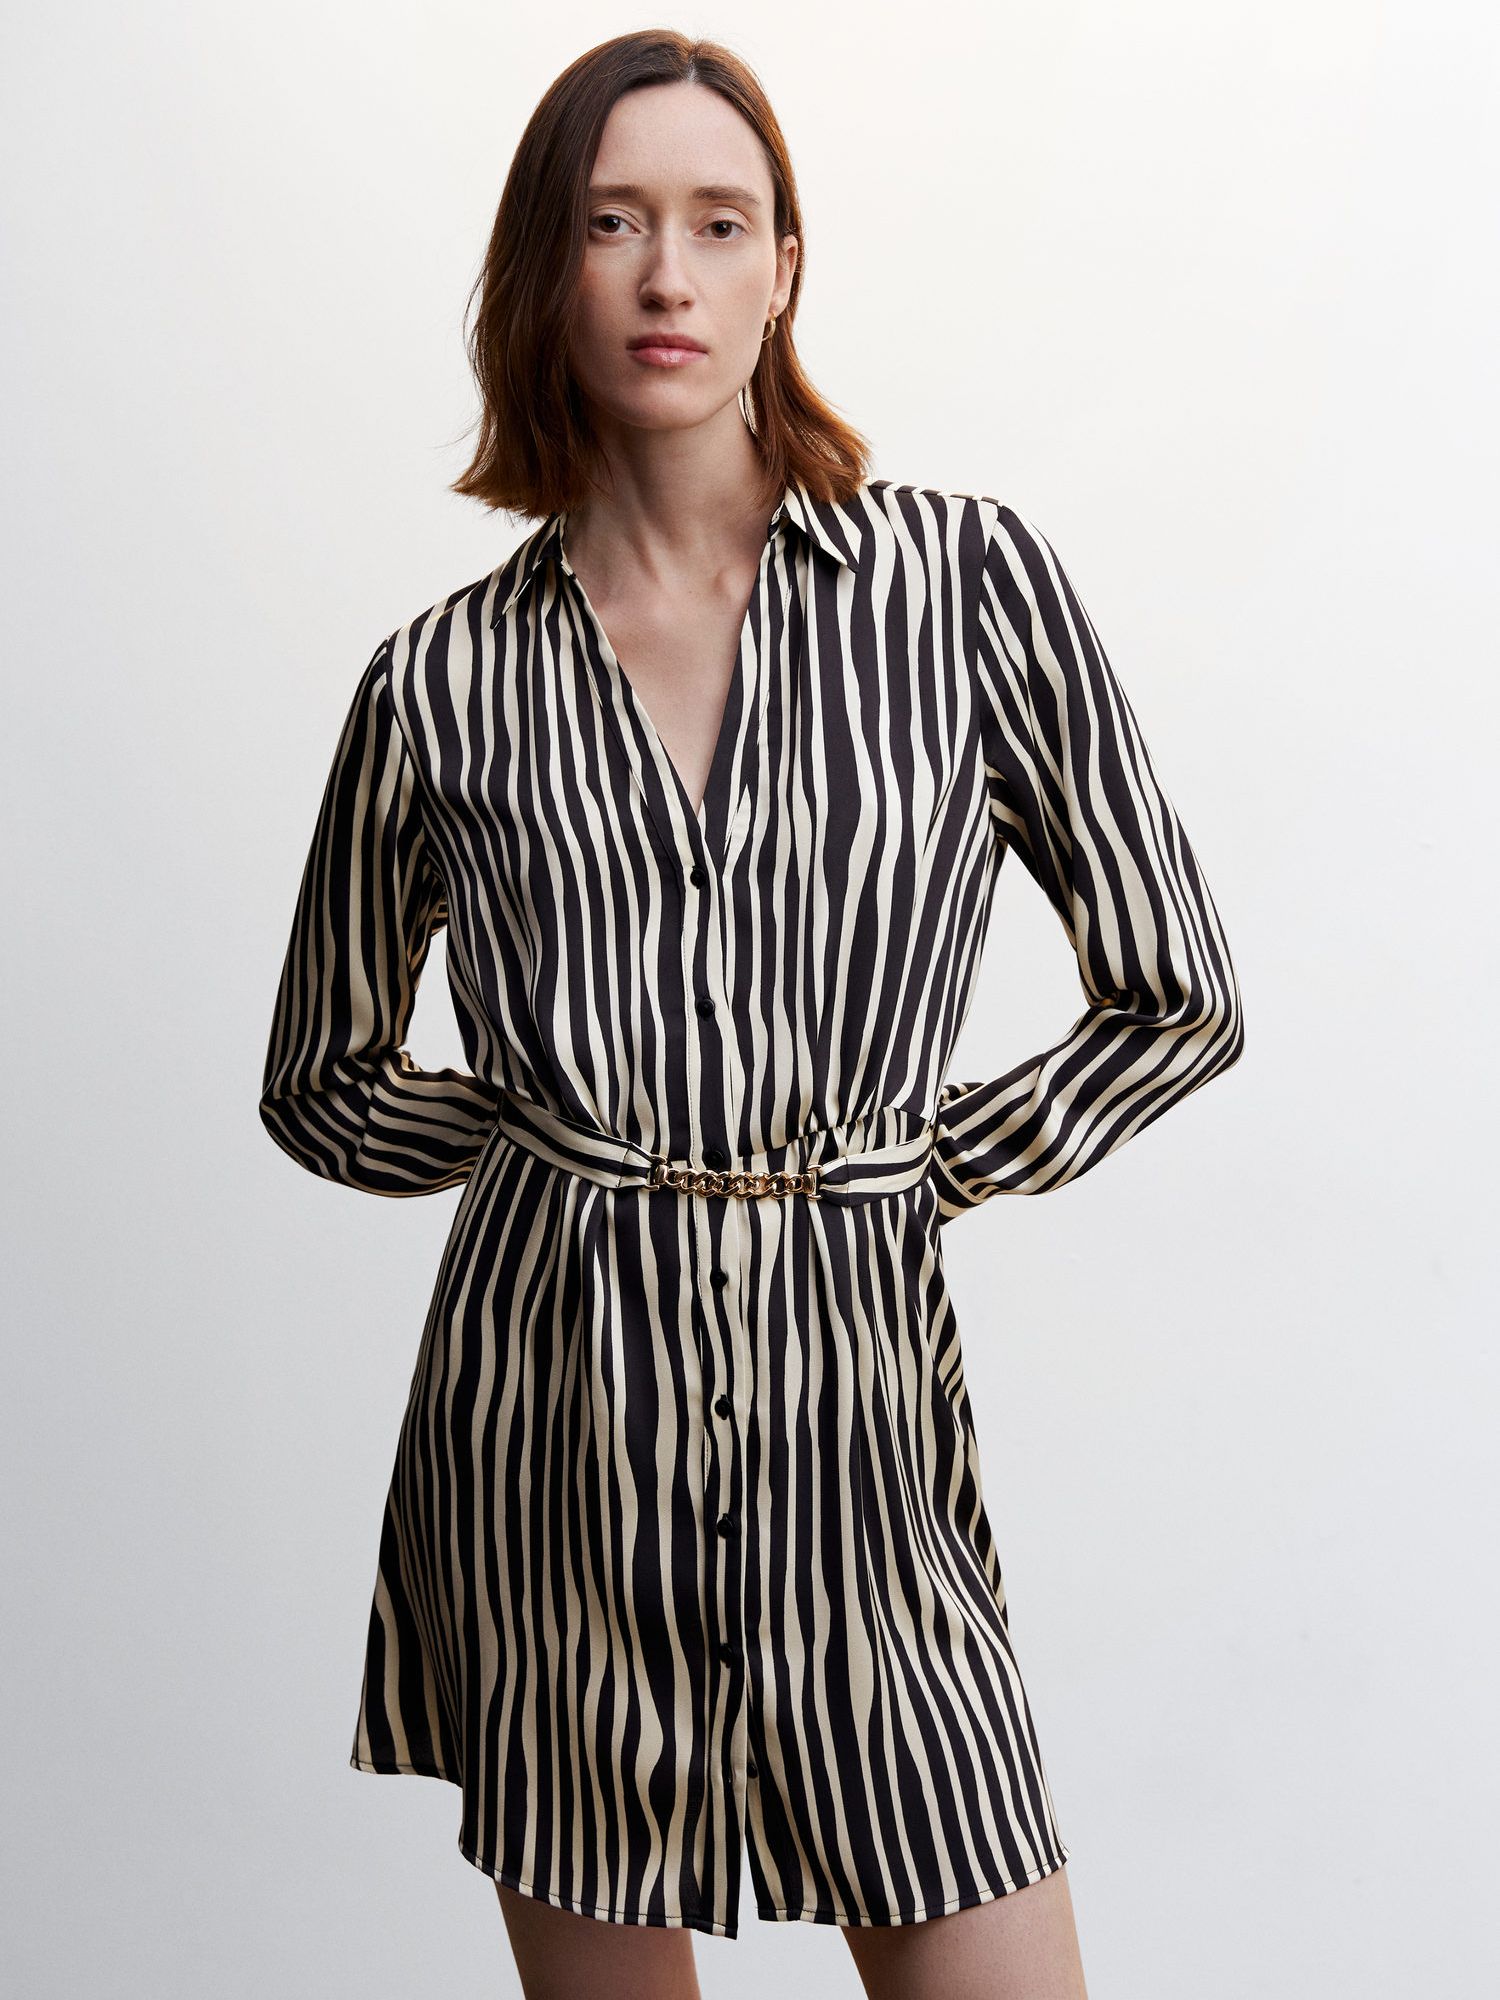 Mango Ninette Animal Stripe Satin Shirt Dress, Black/White, 10